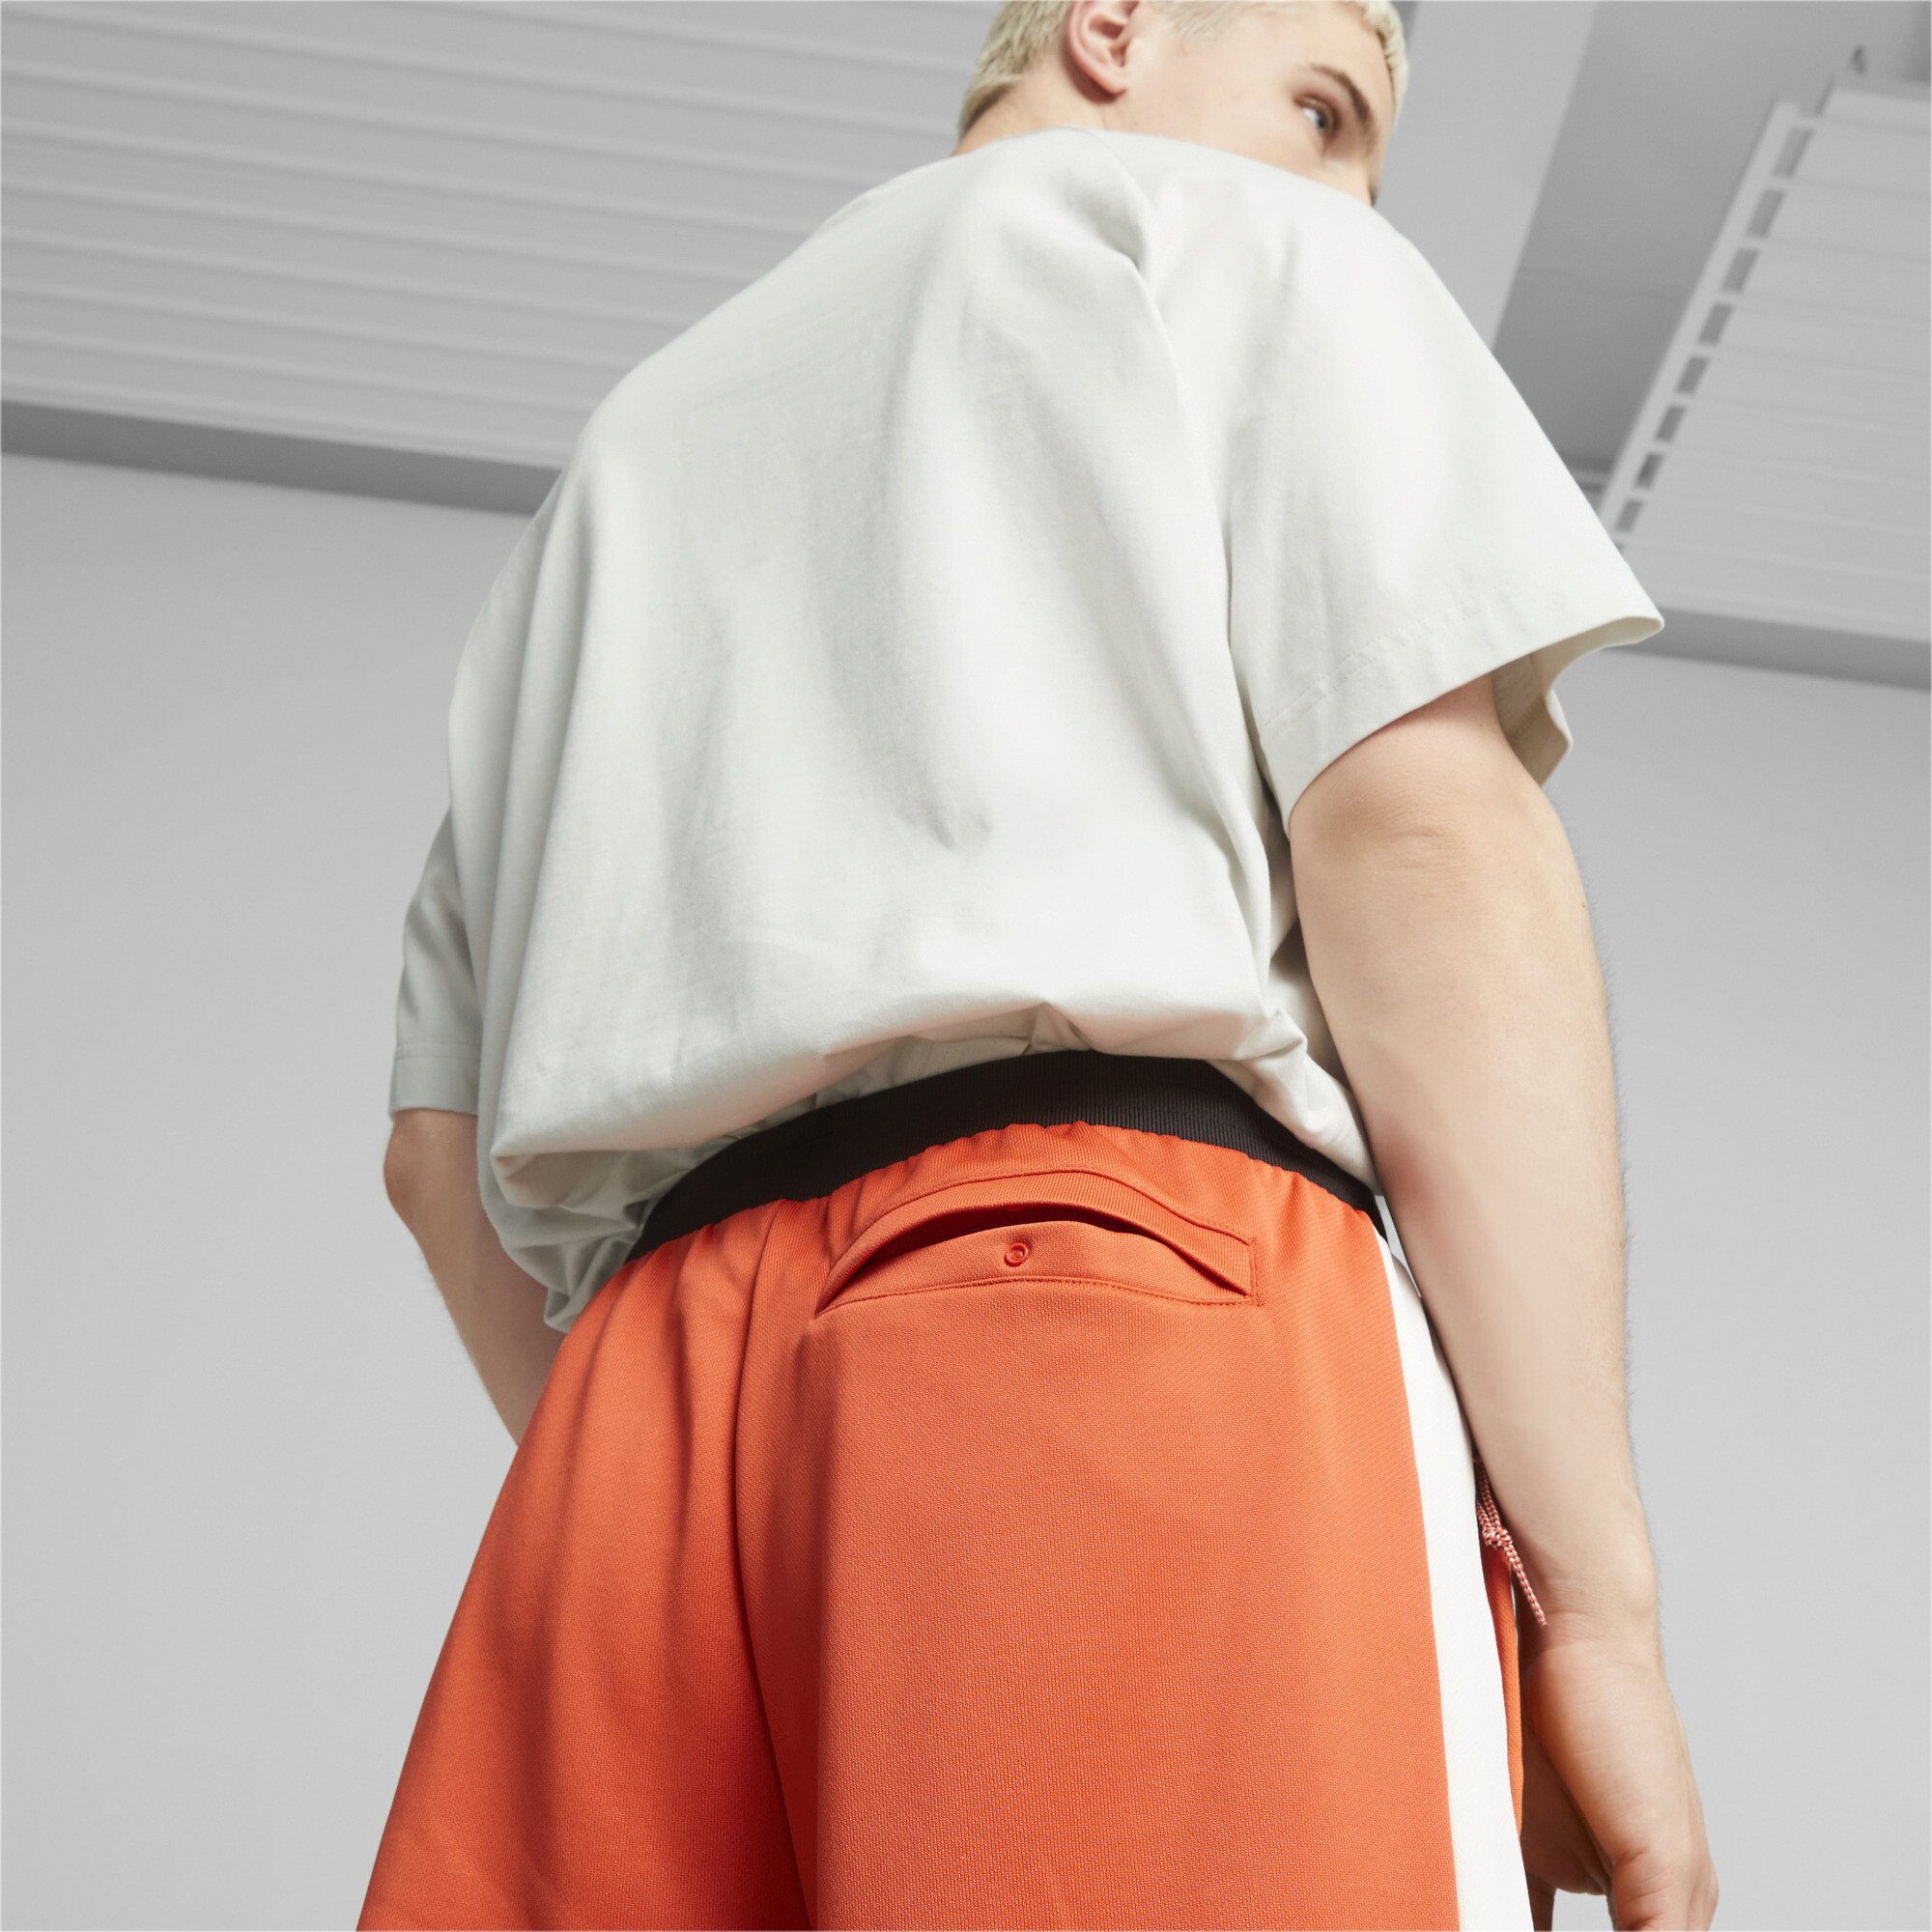 Men's PUMA T7 Track Pants In Orange, Size Large